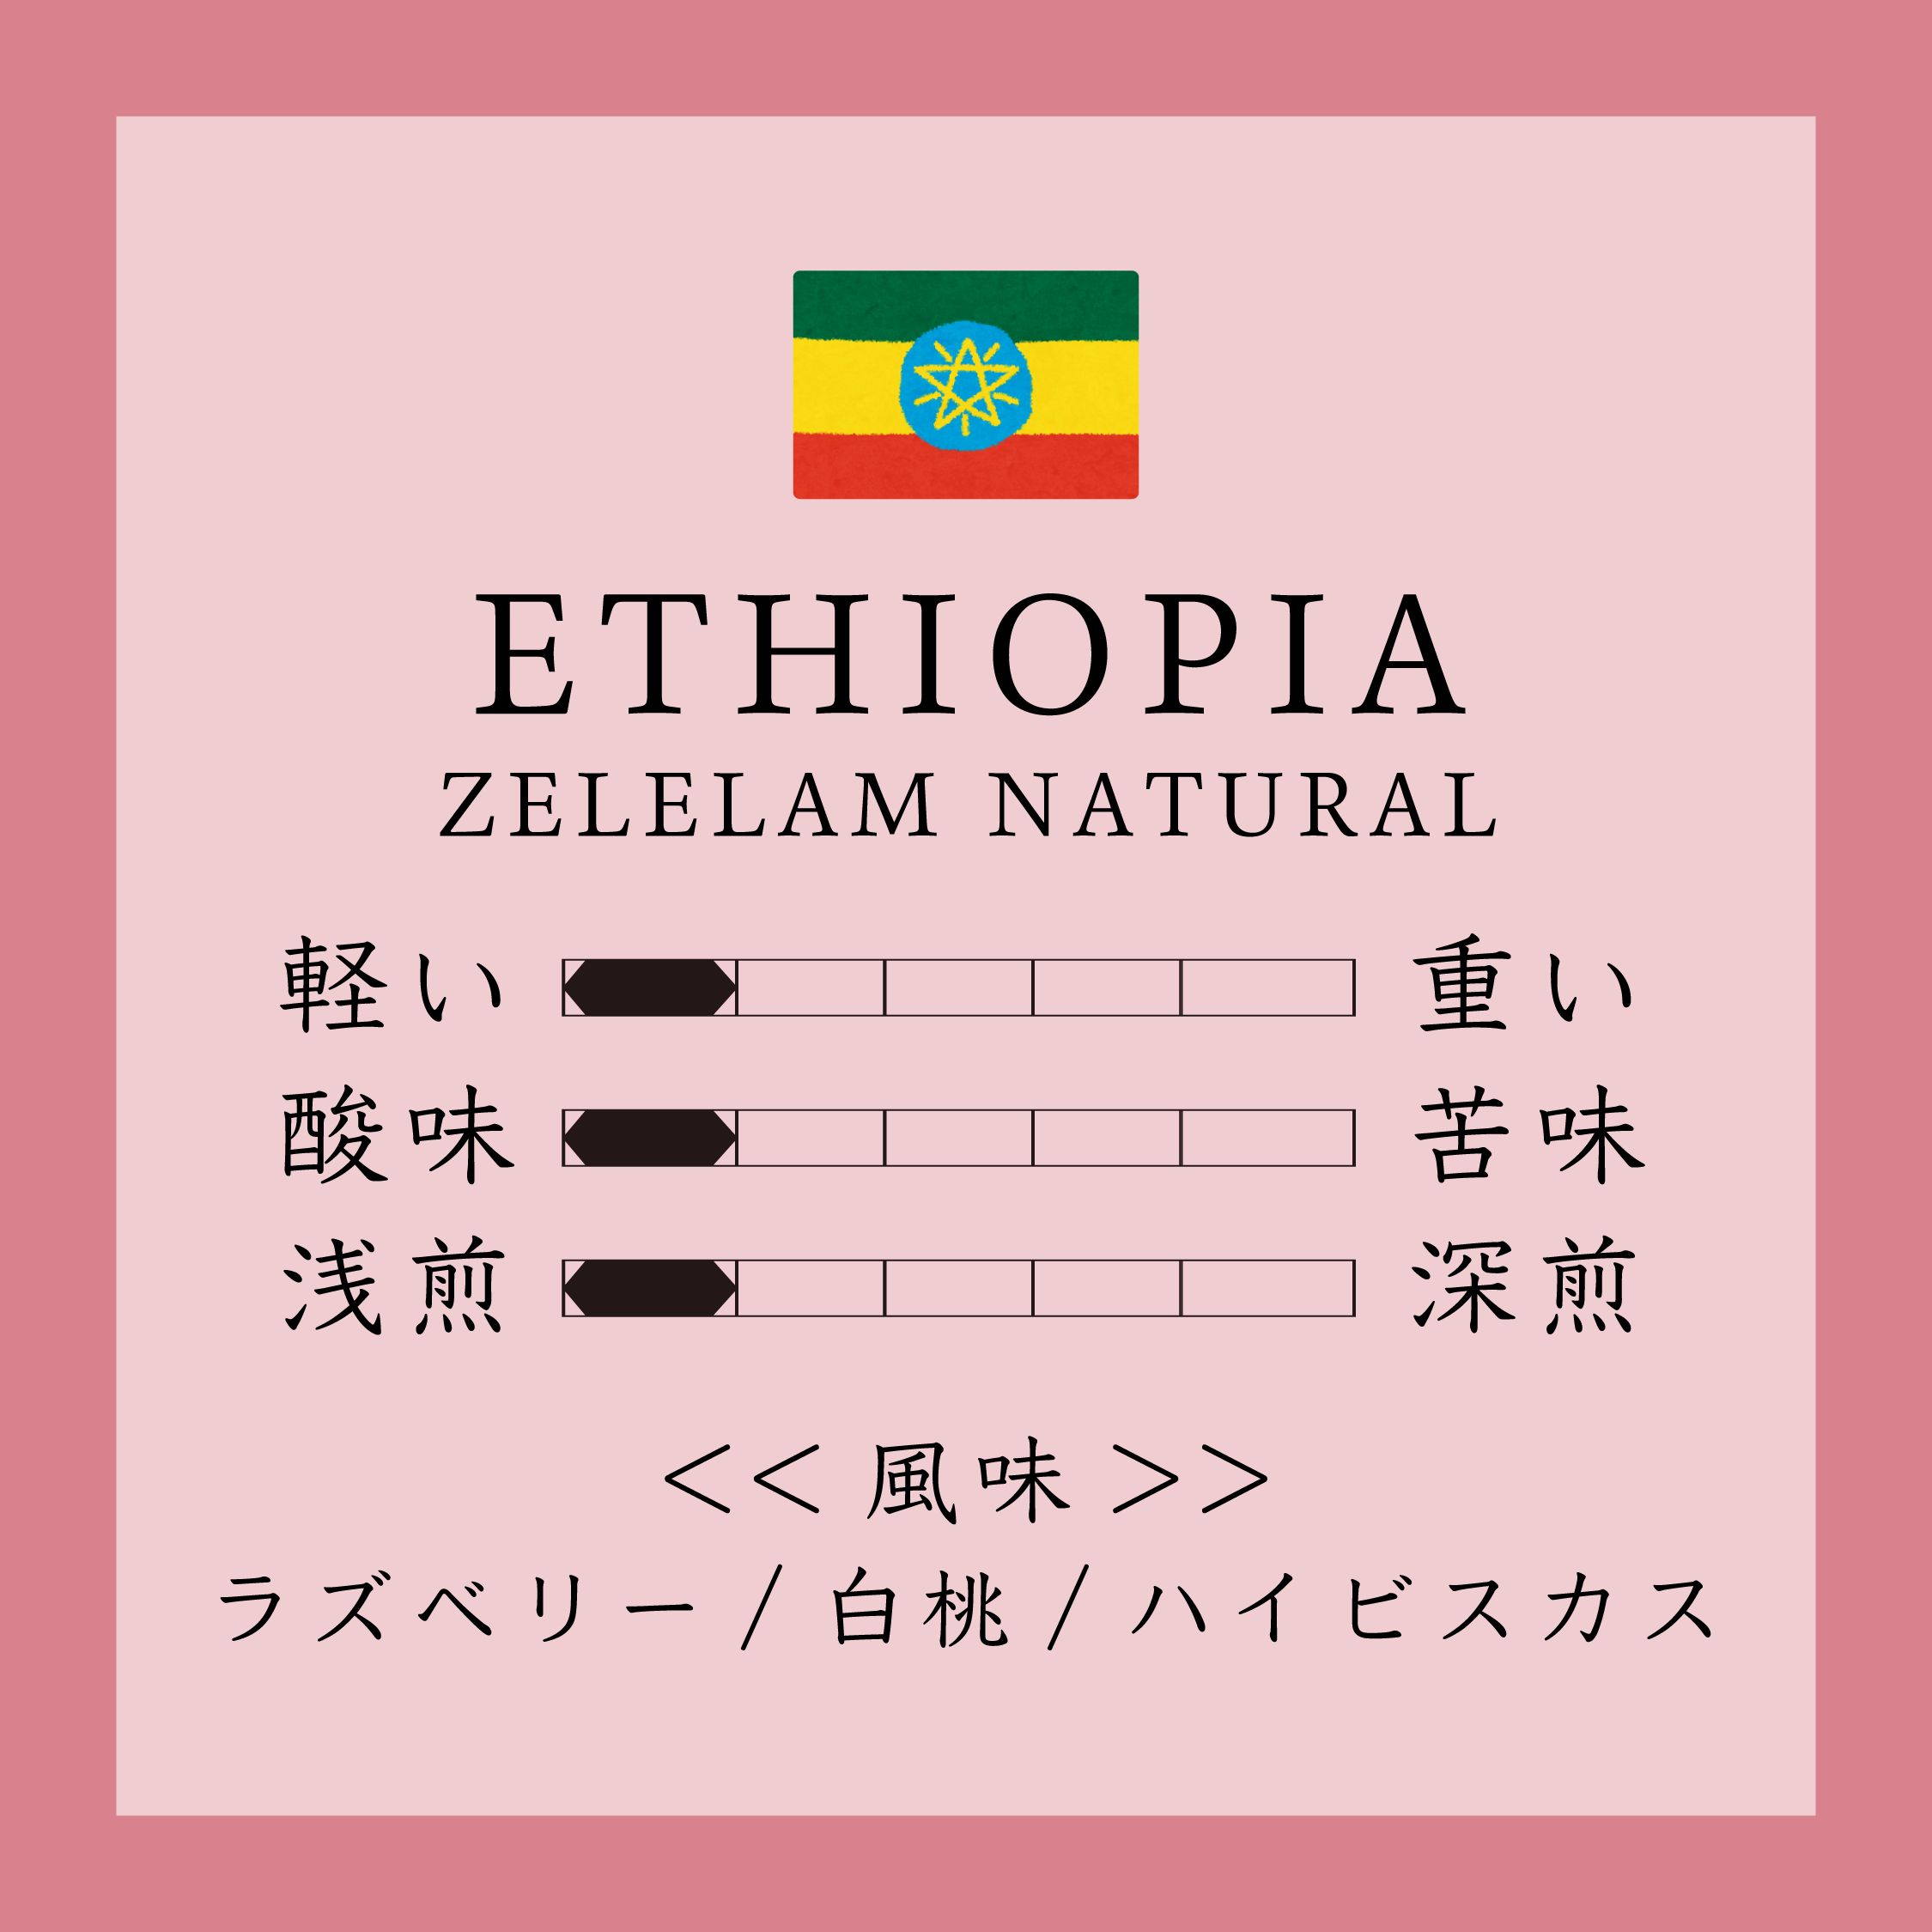 Ethiopia Zelelam Natural 150g